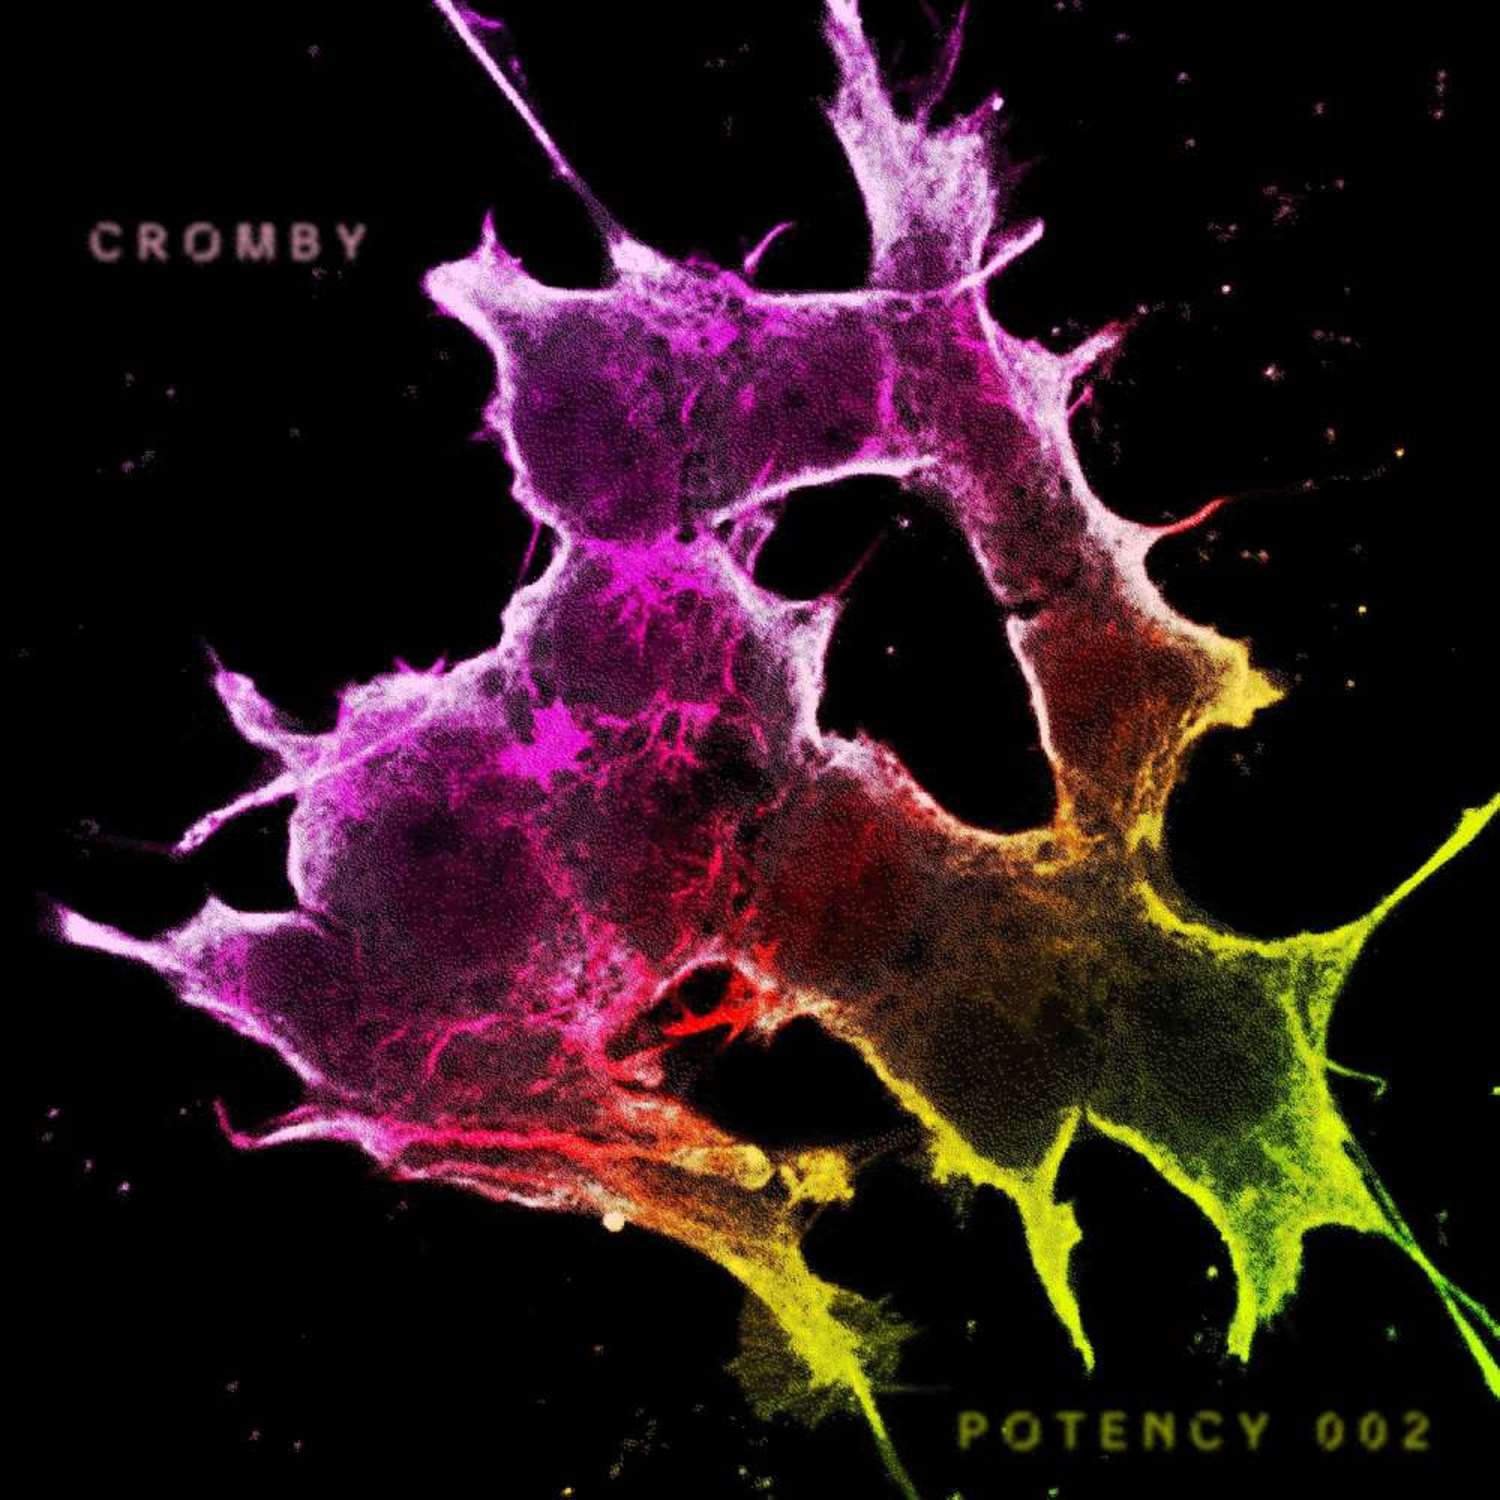 Cromby - POTENCY002